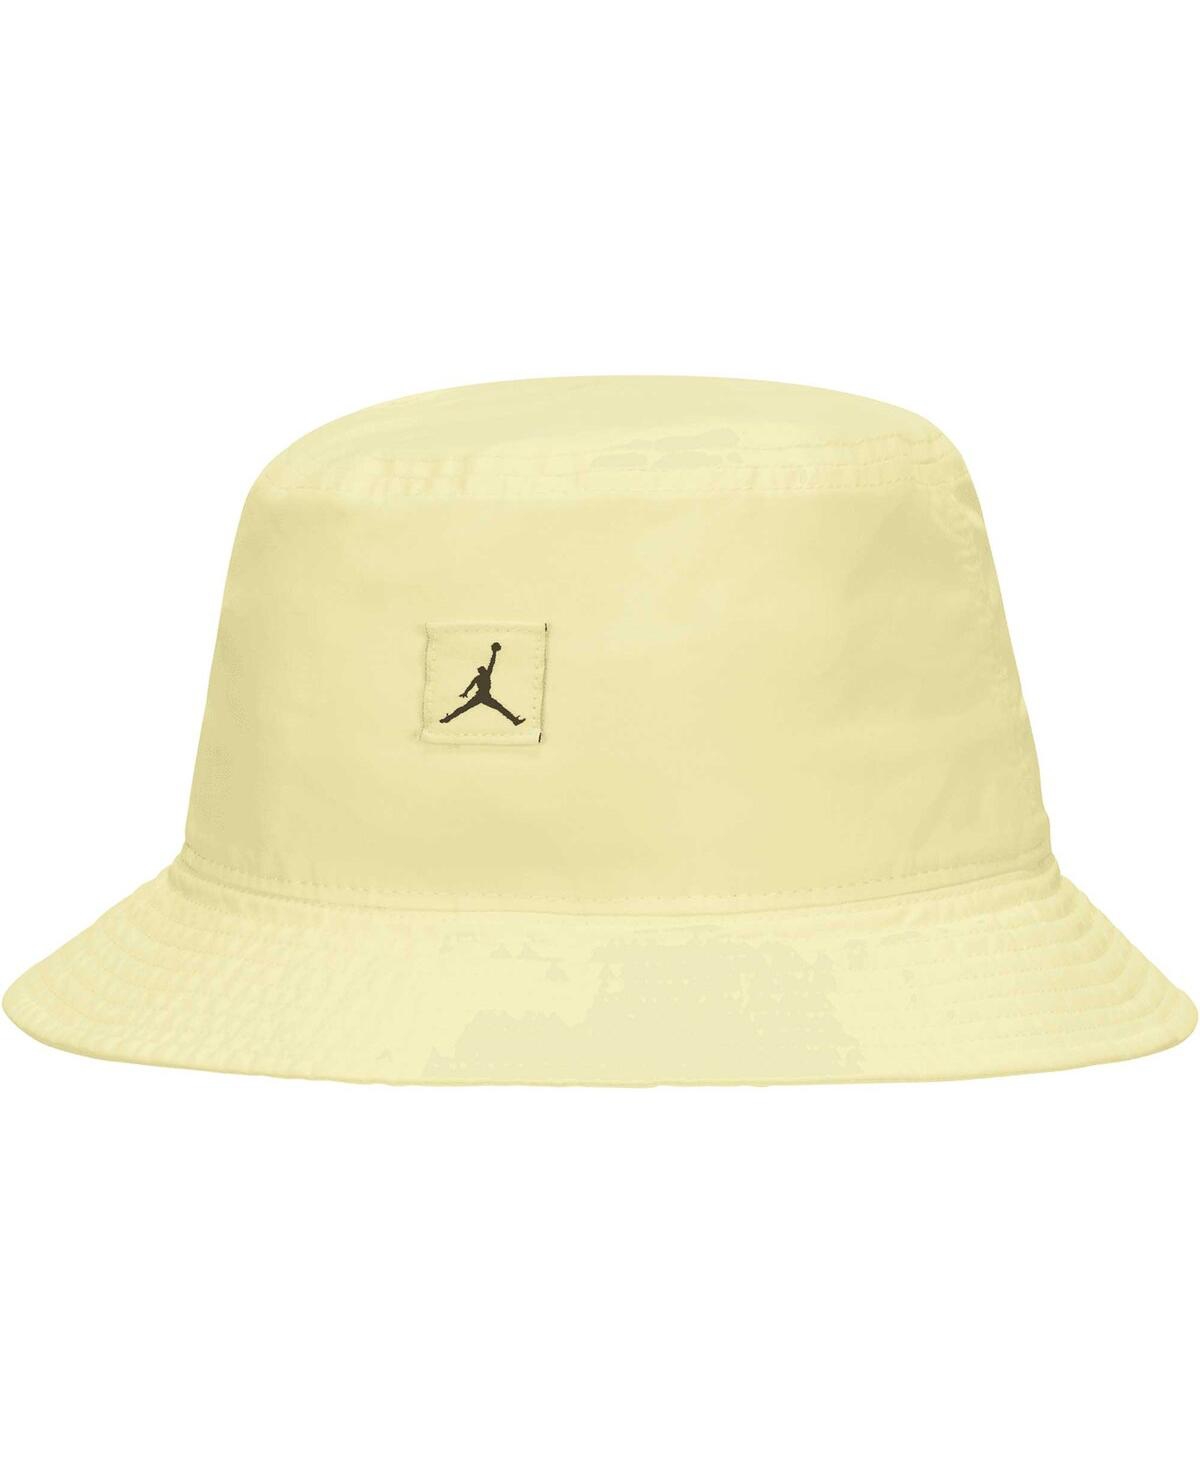 Men's Jordan Yellow Jumpman Washed Bucket Hat - Yellow